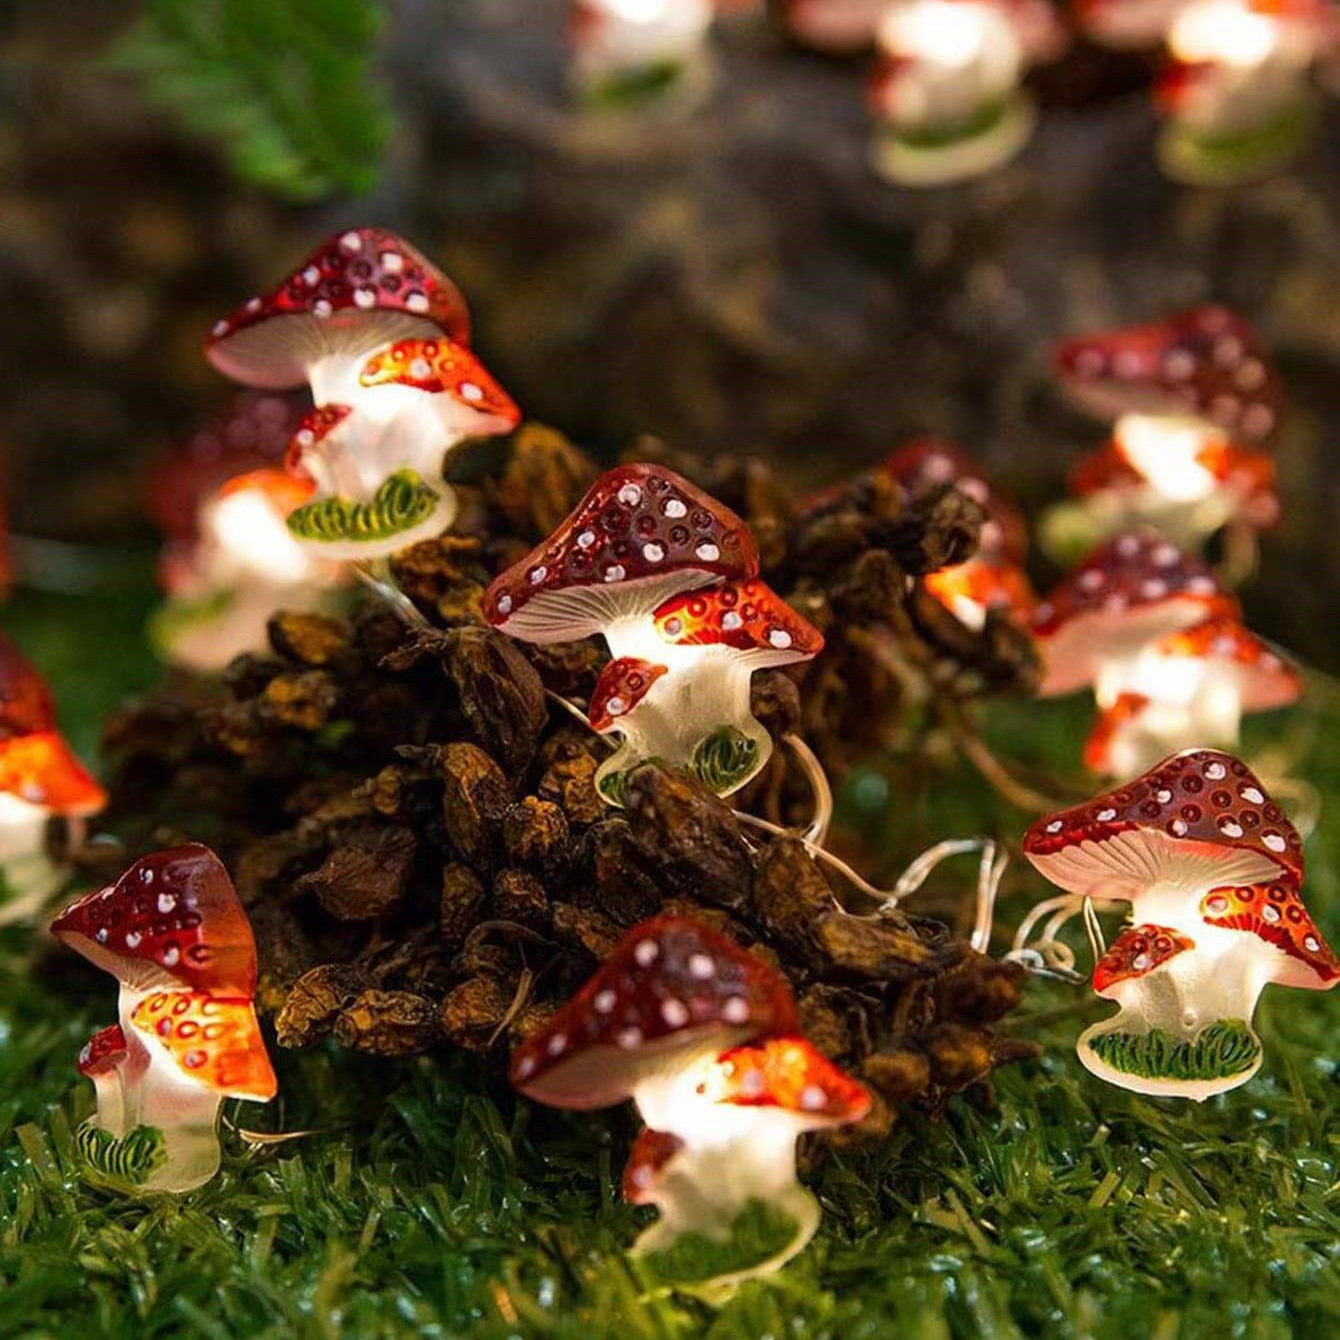 LED Light Cherry Blossom Hazelnut Mushroom